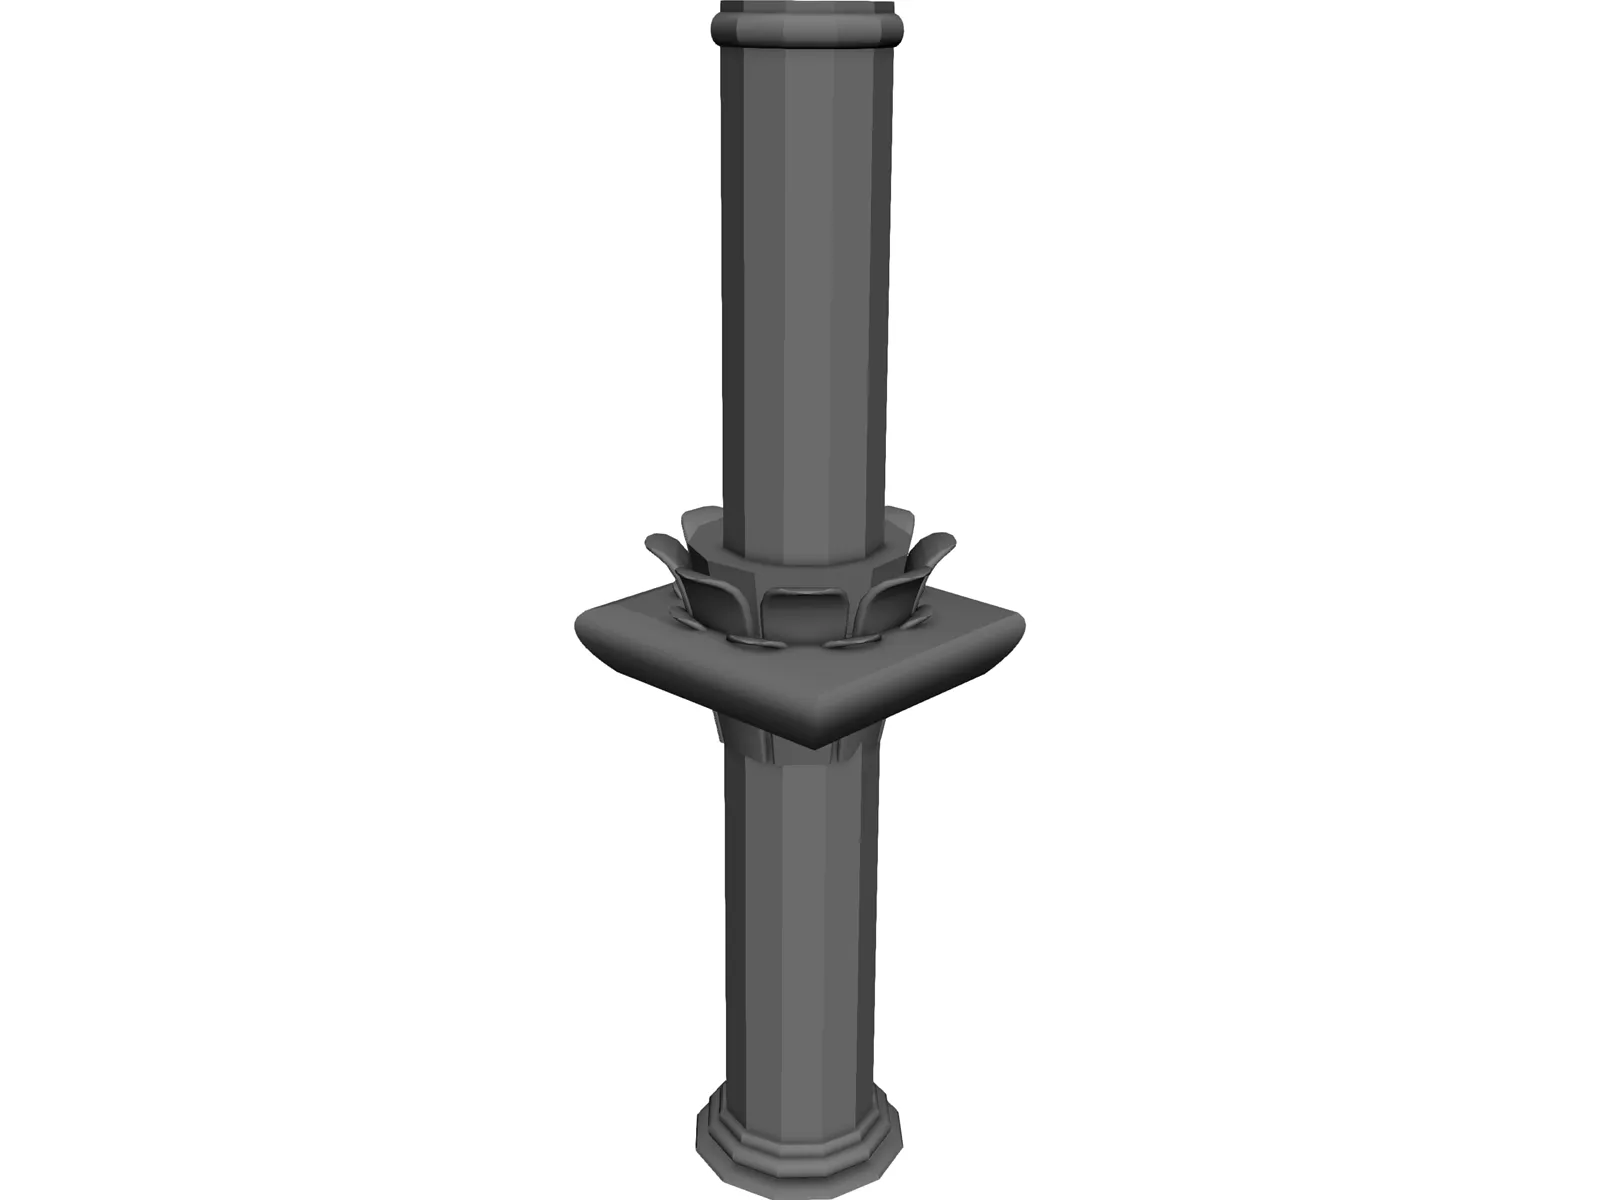 Corinthian Pillar 3D Model